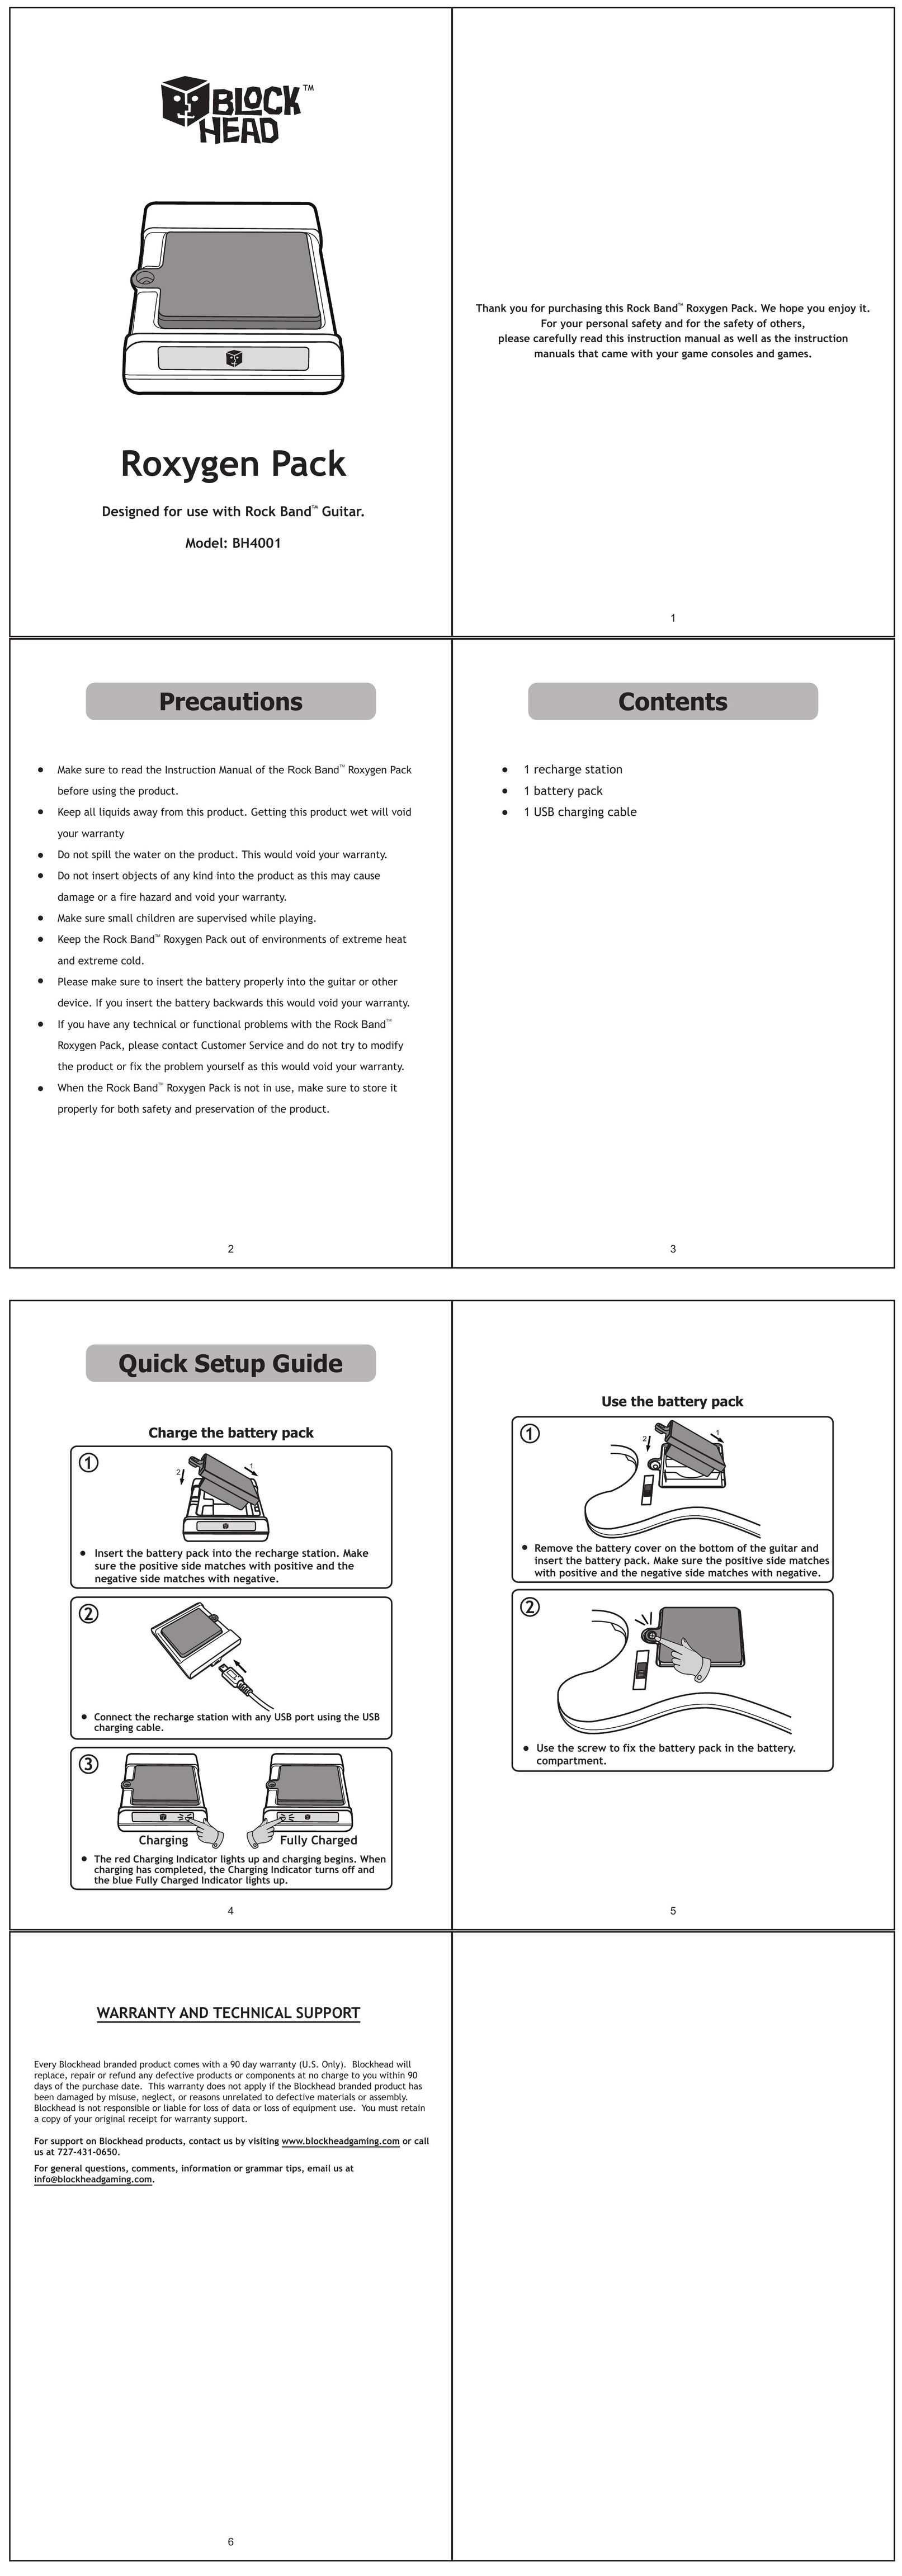 Blockhead BH4001 Video Game Controller User Manual